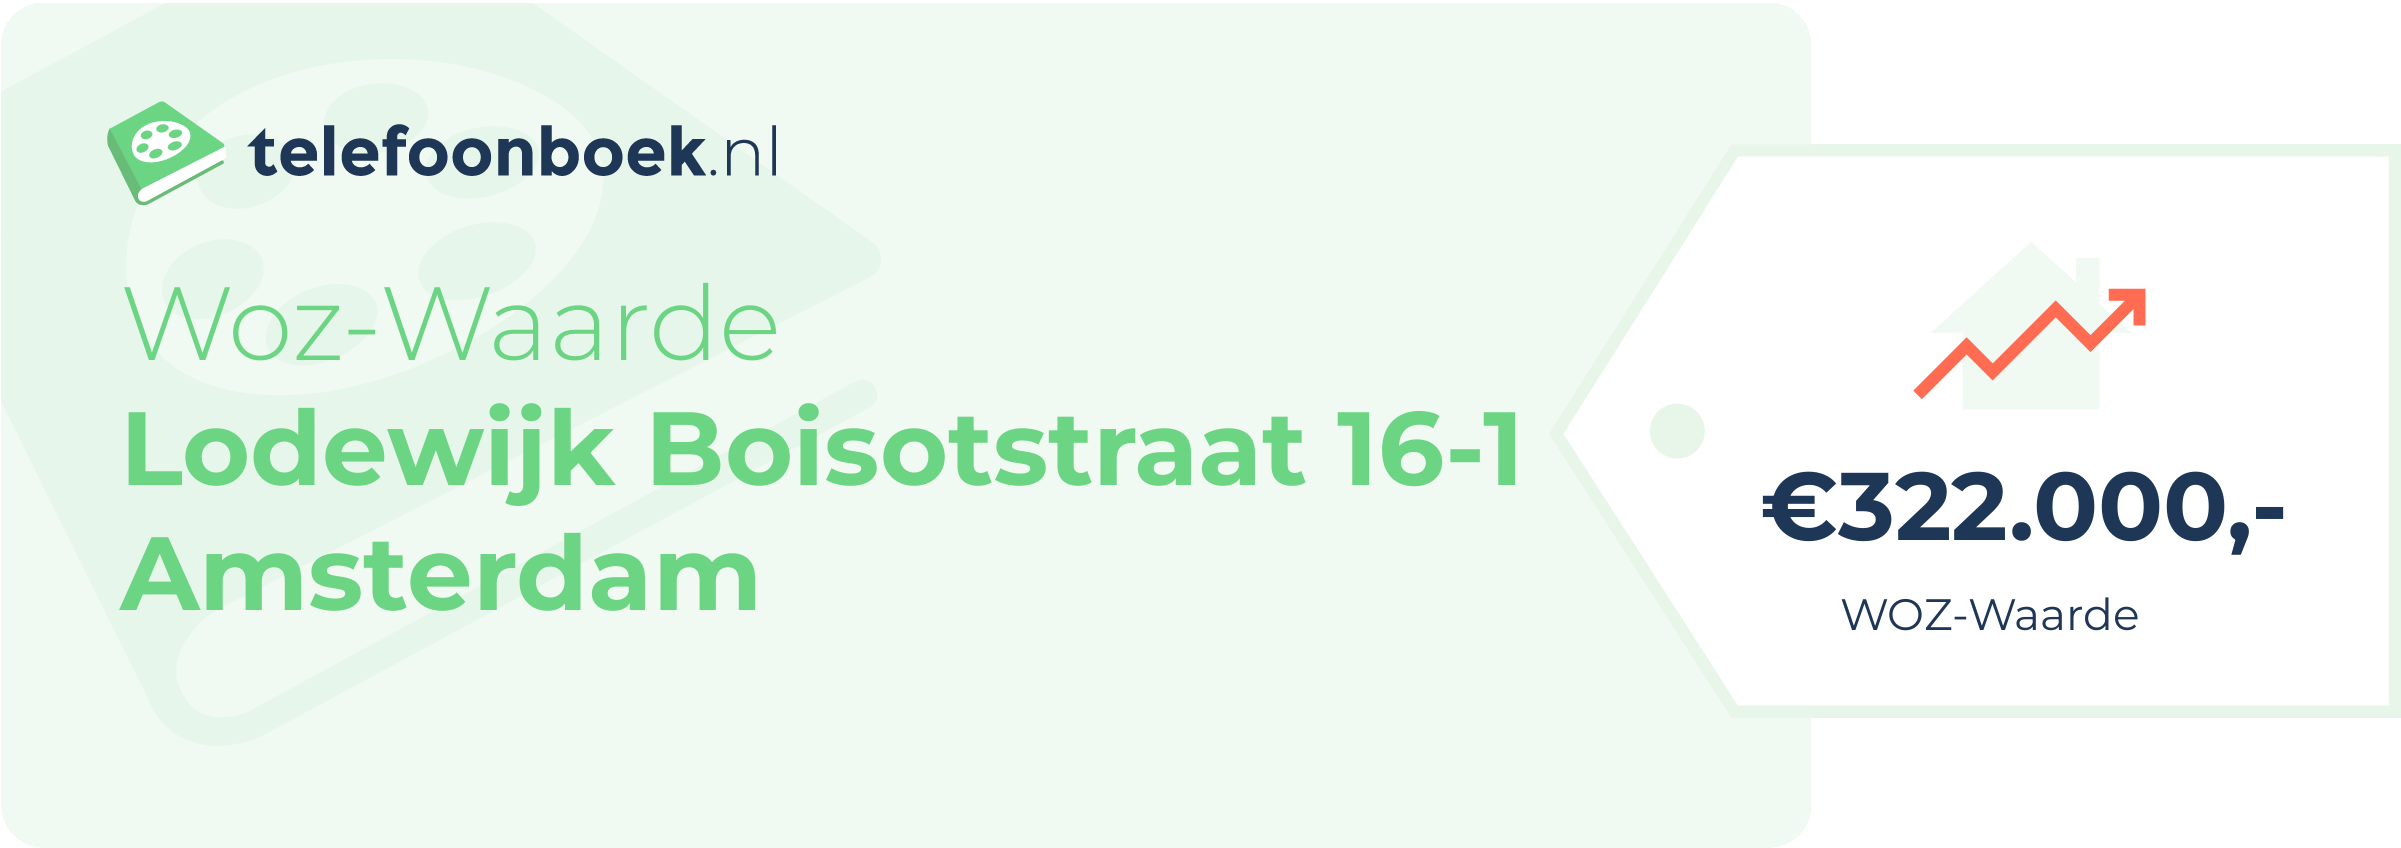 WOZ-waarde Lodewijk Boisotstraat 16-1 Amsterdam